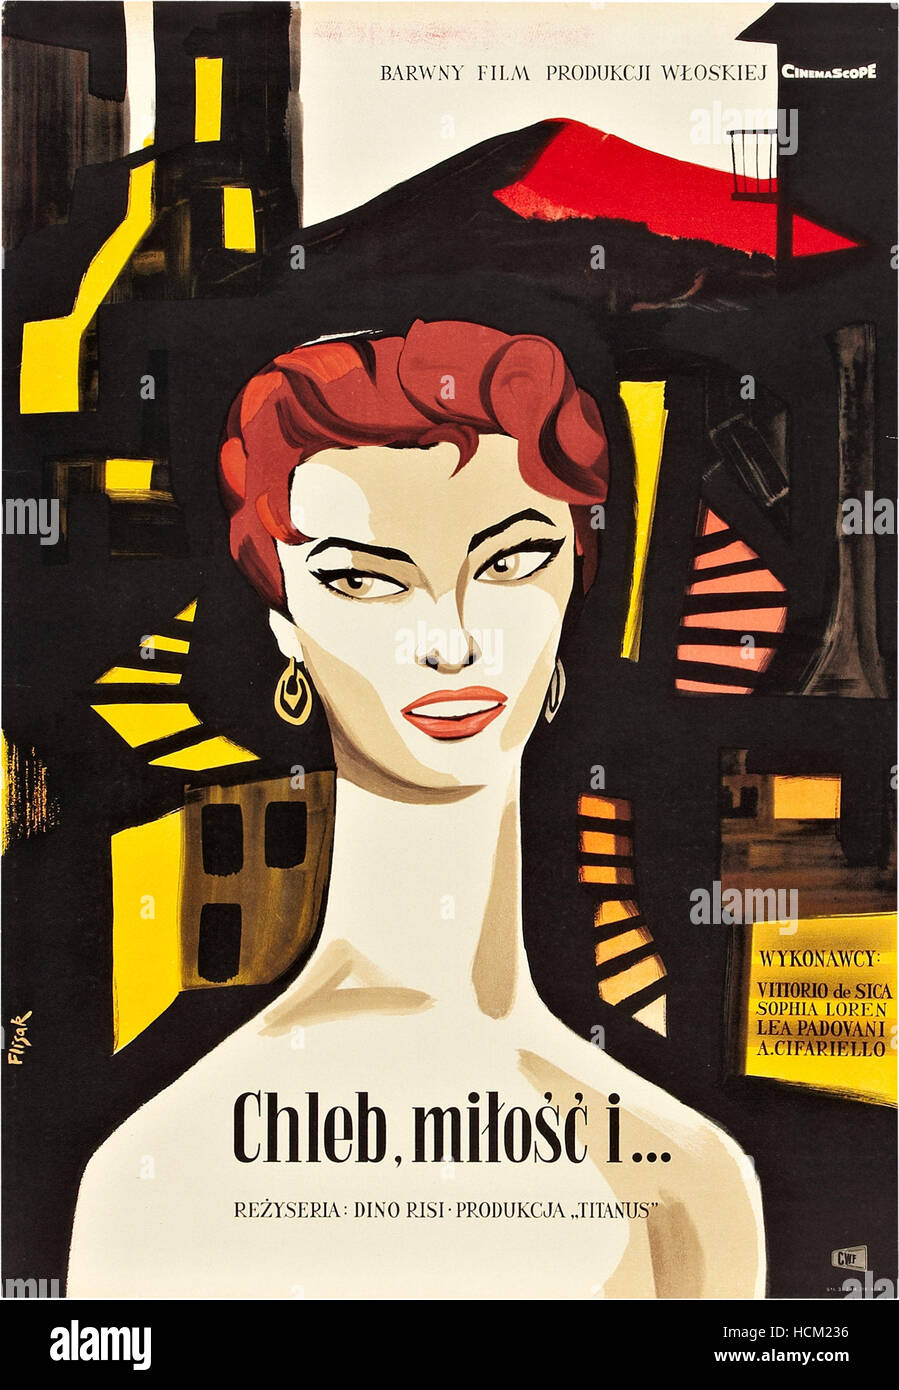 SCANDAL IN SORRENTO, (aka PANE, AMORE E..., aka CHELB, MILOSC I...), Sophia Loren on Polish poster art, 1955. Stock Photo